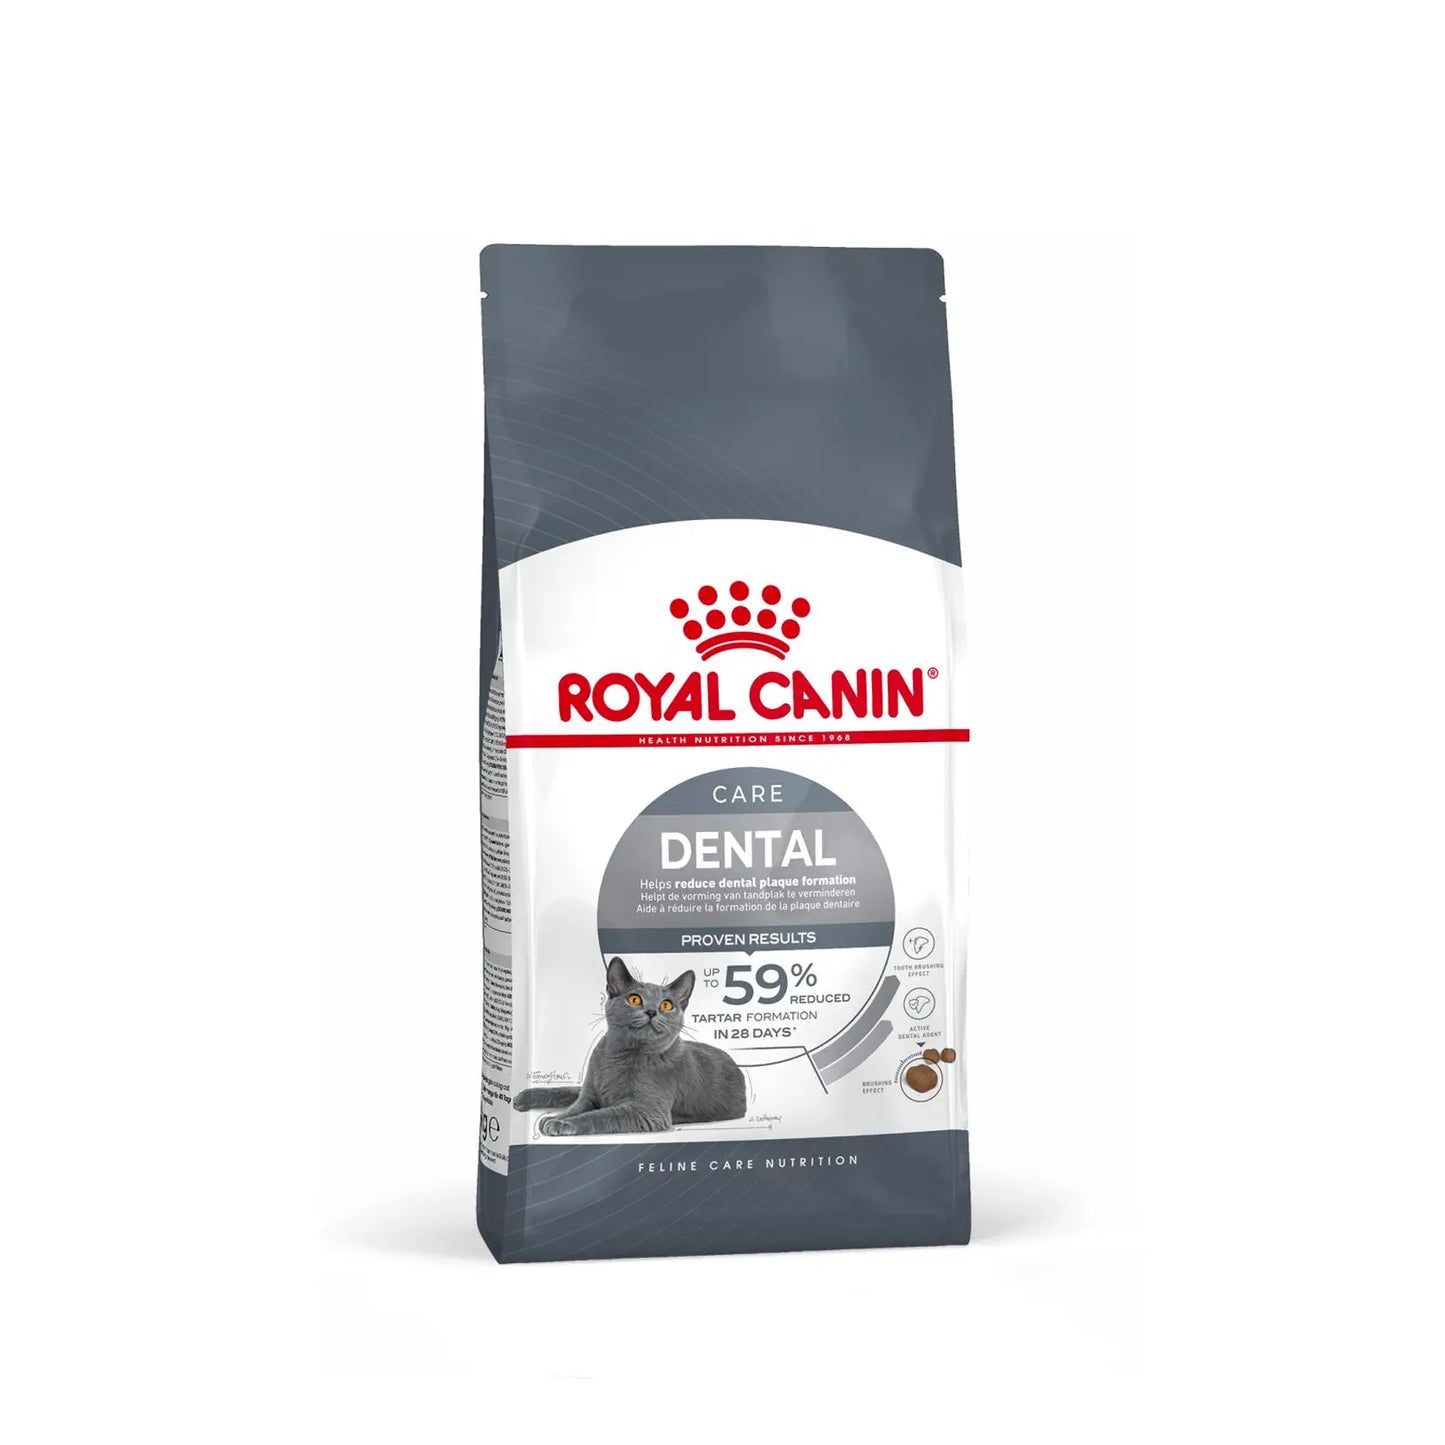 Royal Canin - Care Dental Cat Dry Food